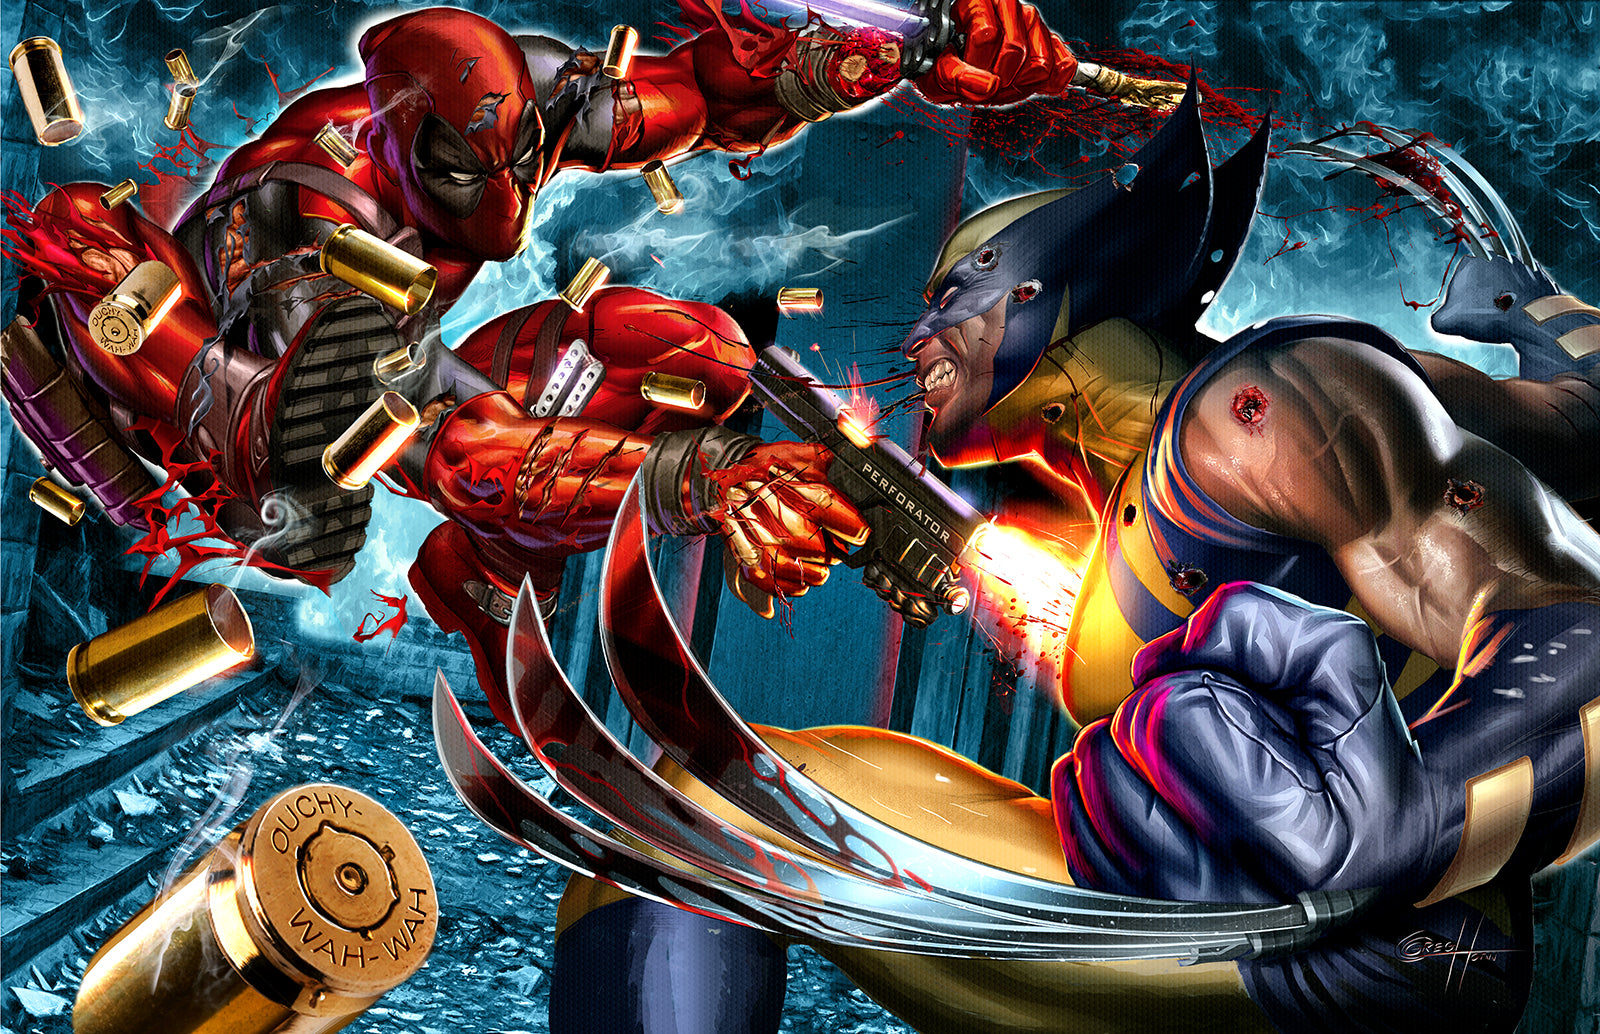 Wolverine VS Deadpool - 24" x 36" Poster - Signed